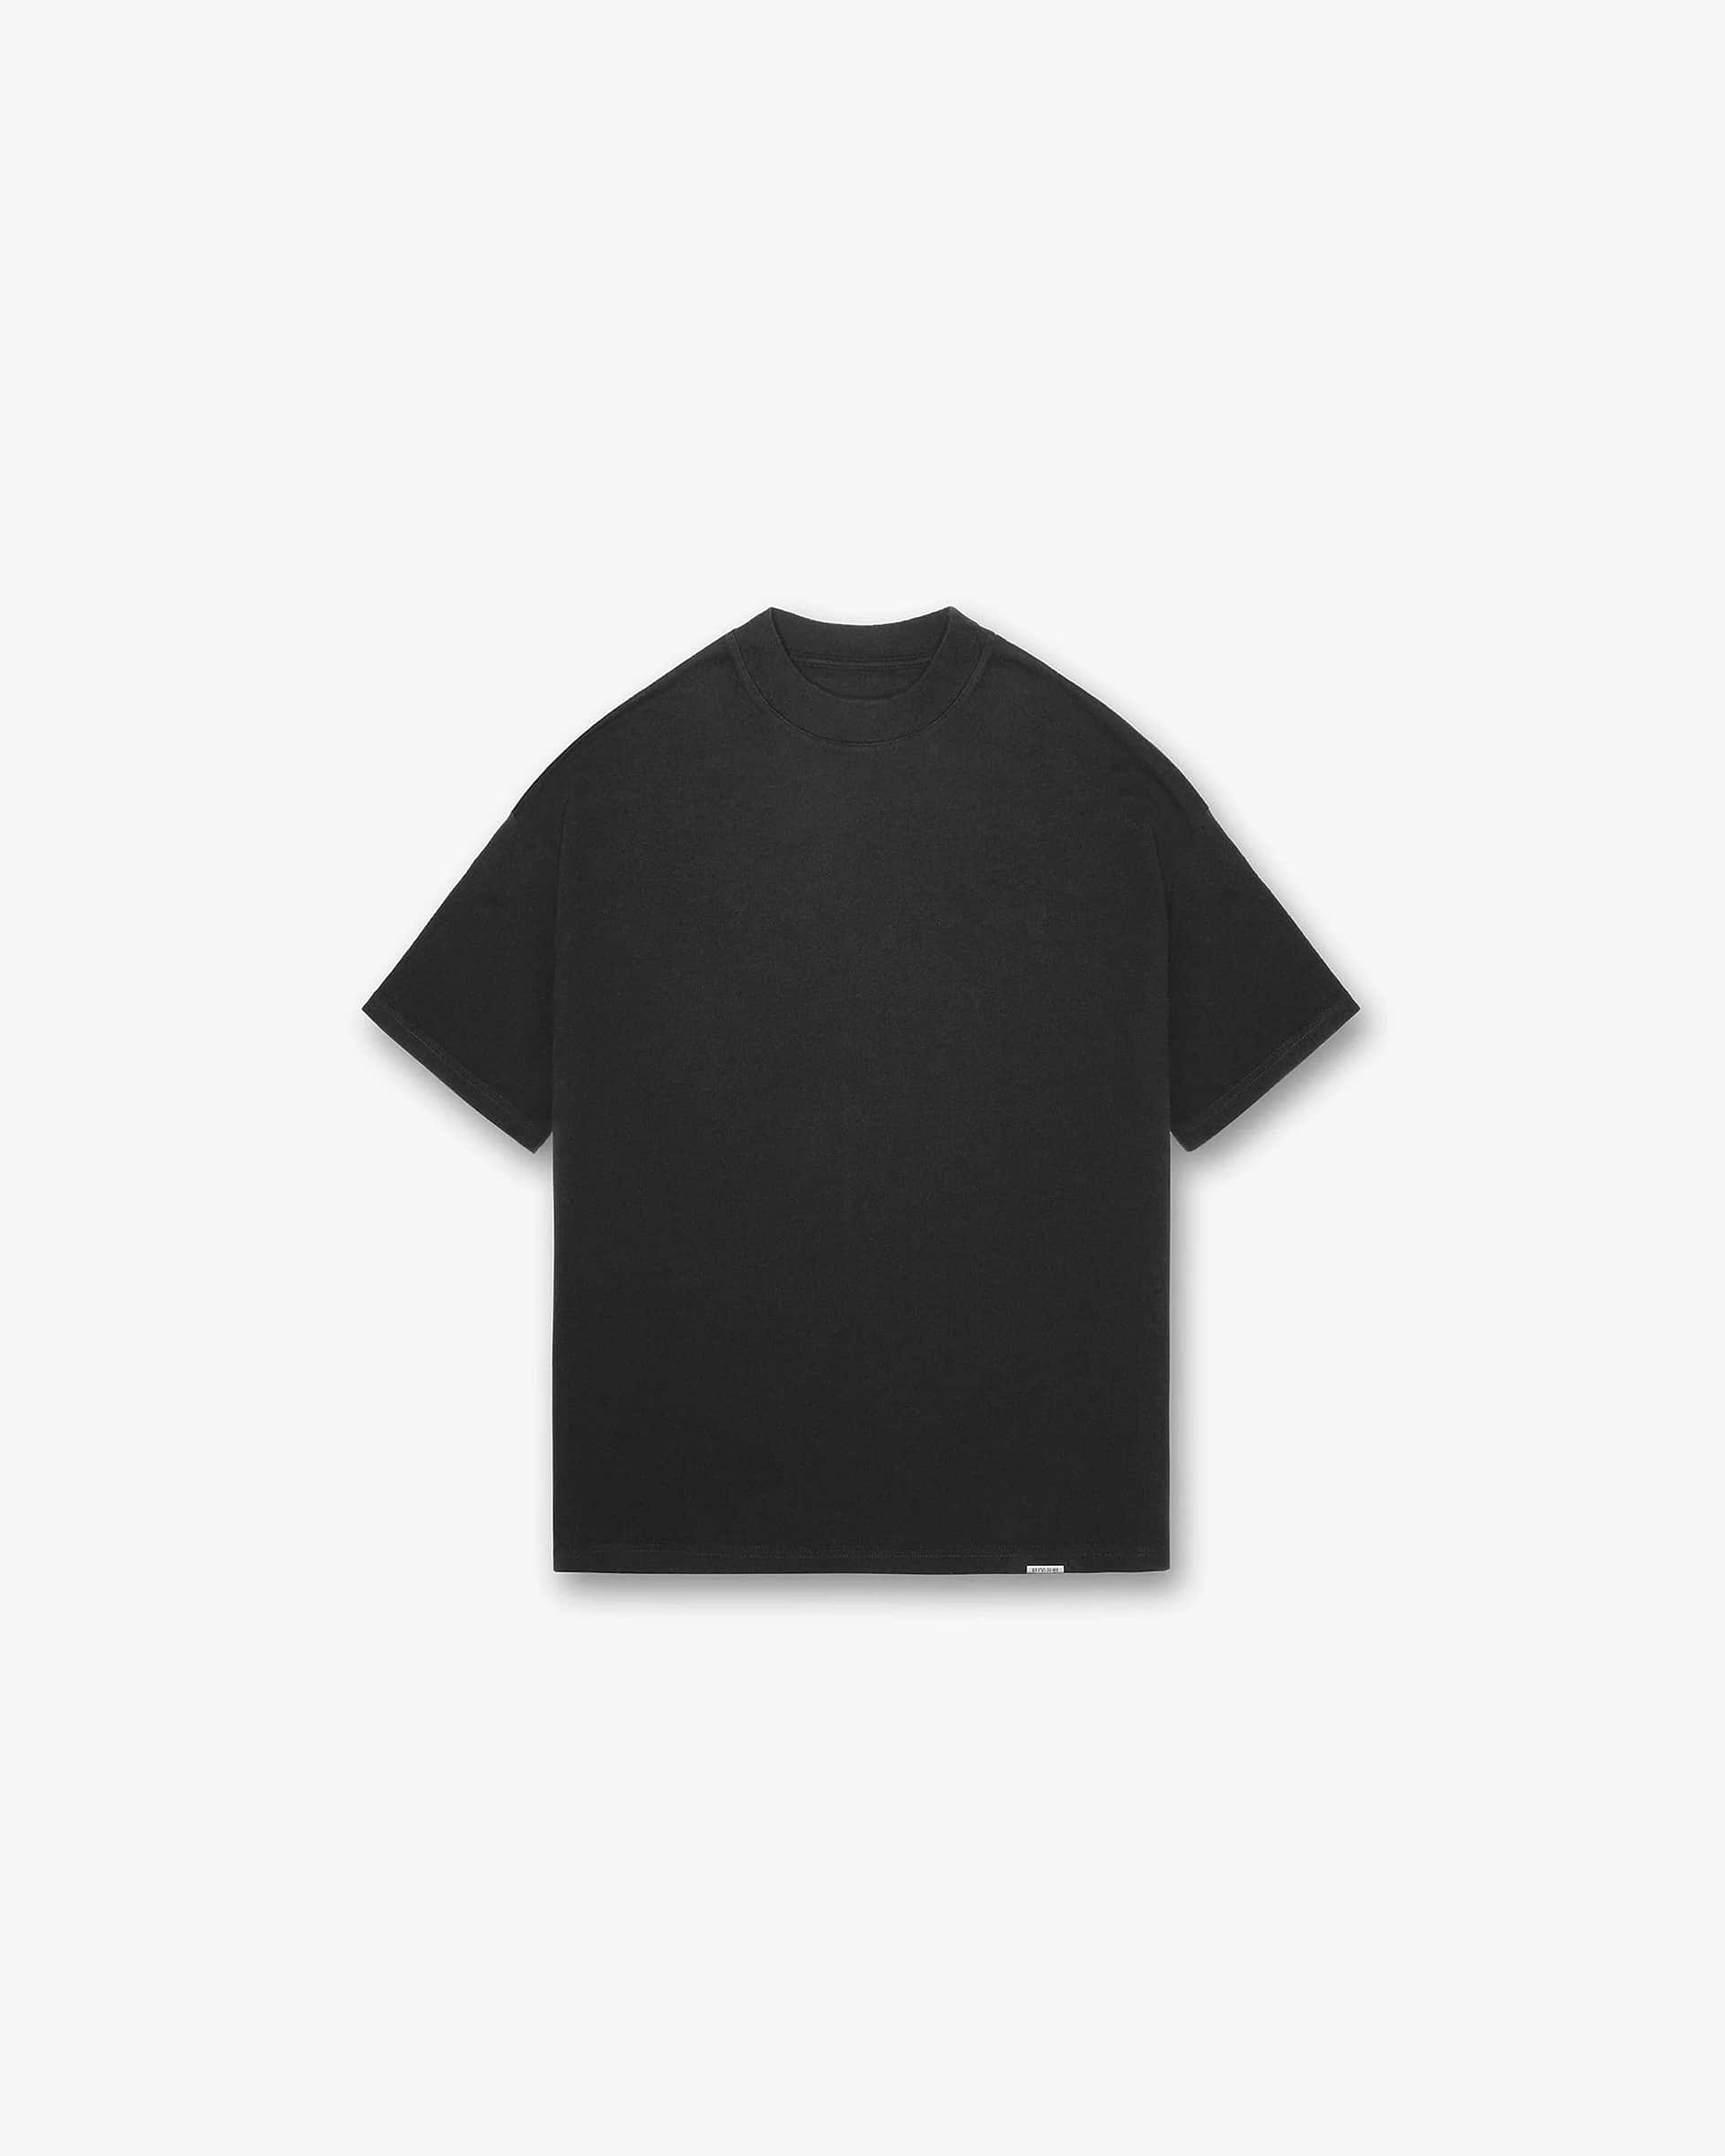 Vintage Black T-Shirt | Blank | Represent Clo